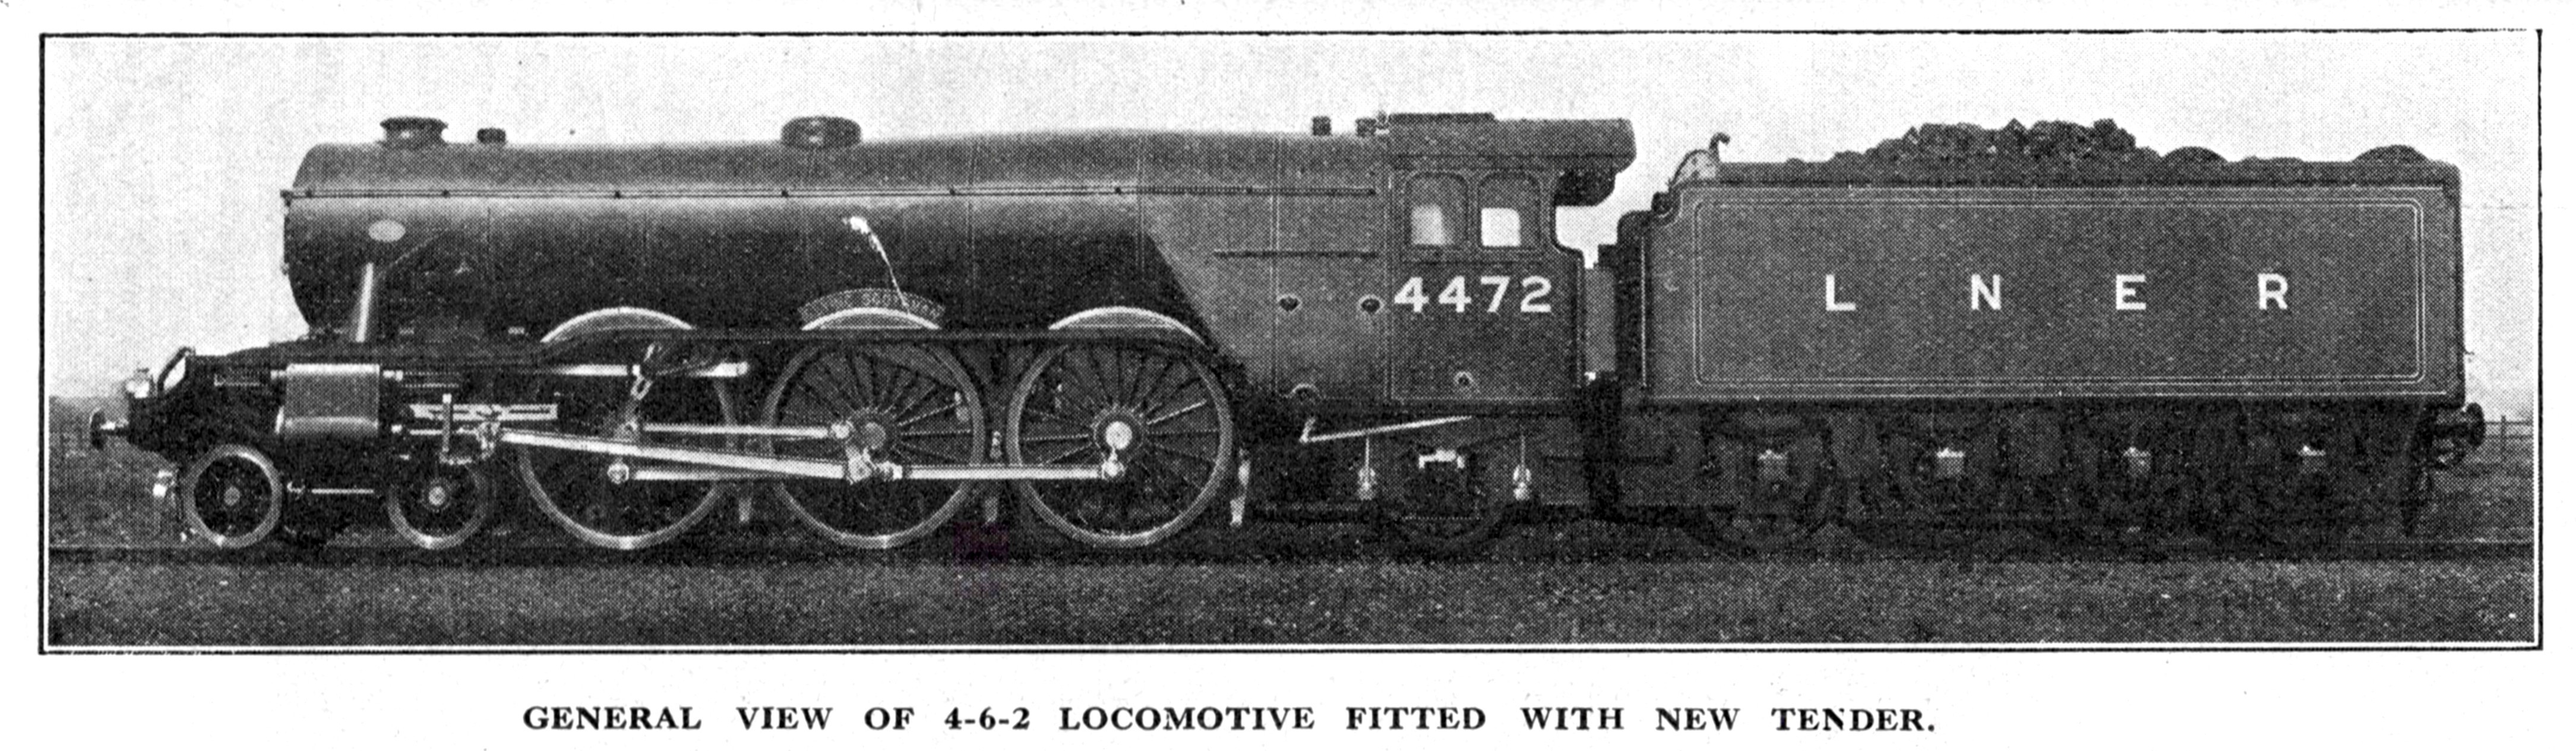 Locomotive Steam Engine Diagram Flying Scotsman Gresley A1 A3 Steam Lo Otive 1923 Lner Br Of Locomotive Steam Engine Diagram